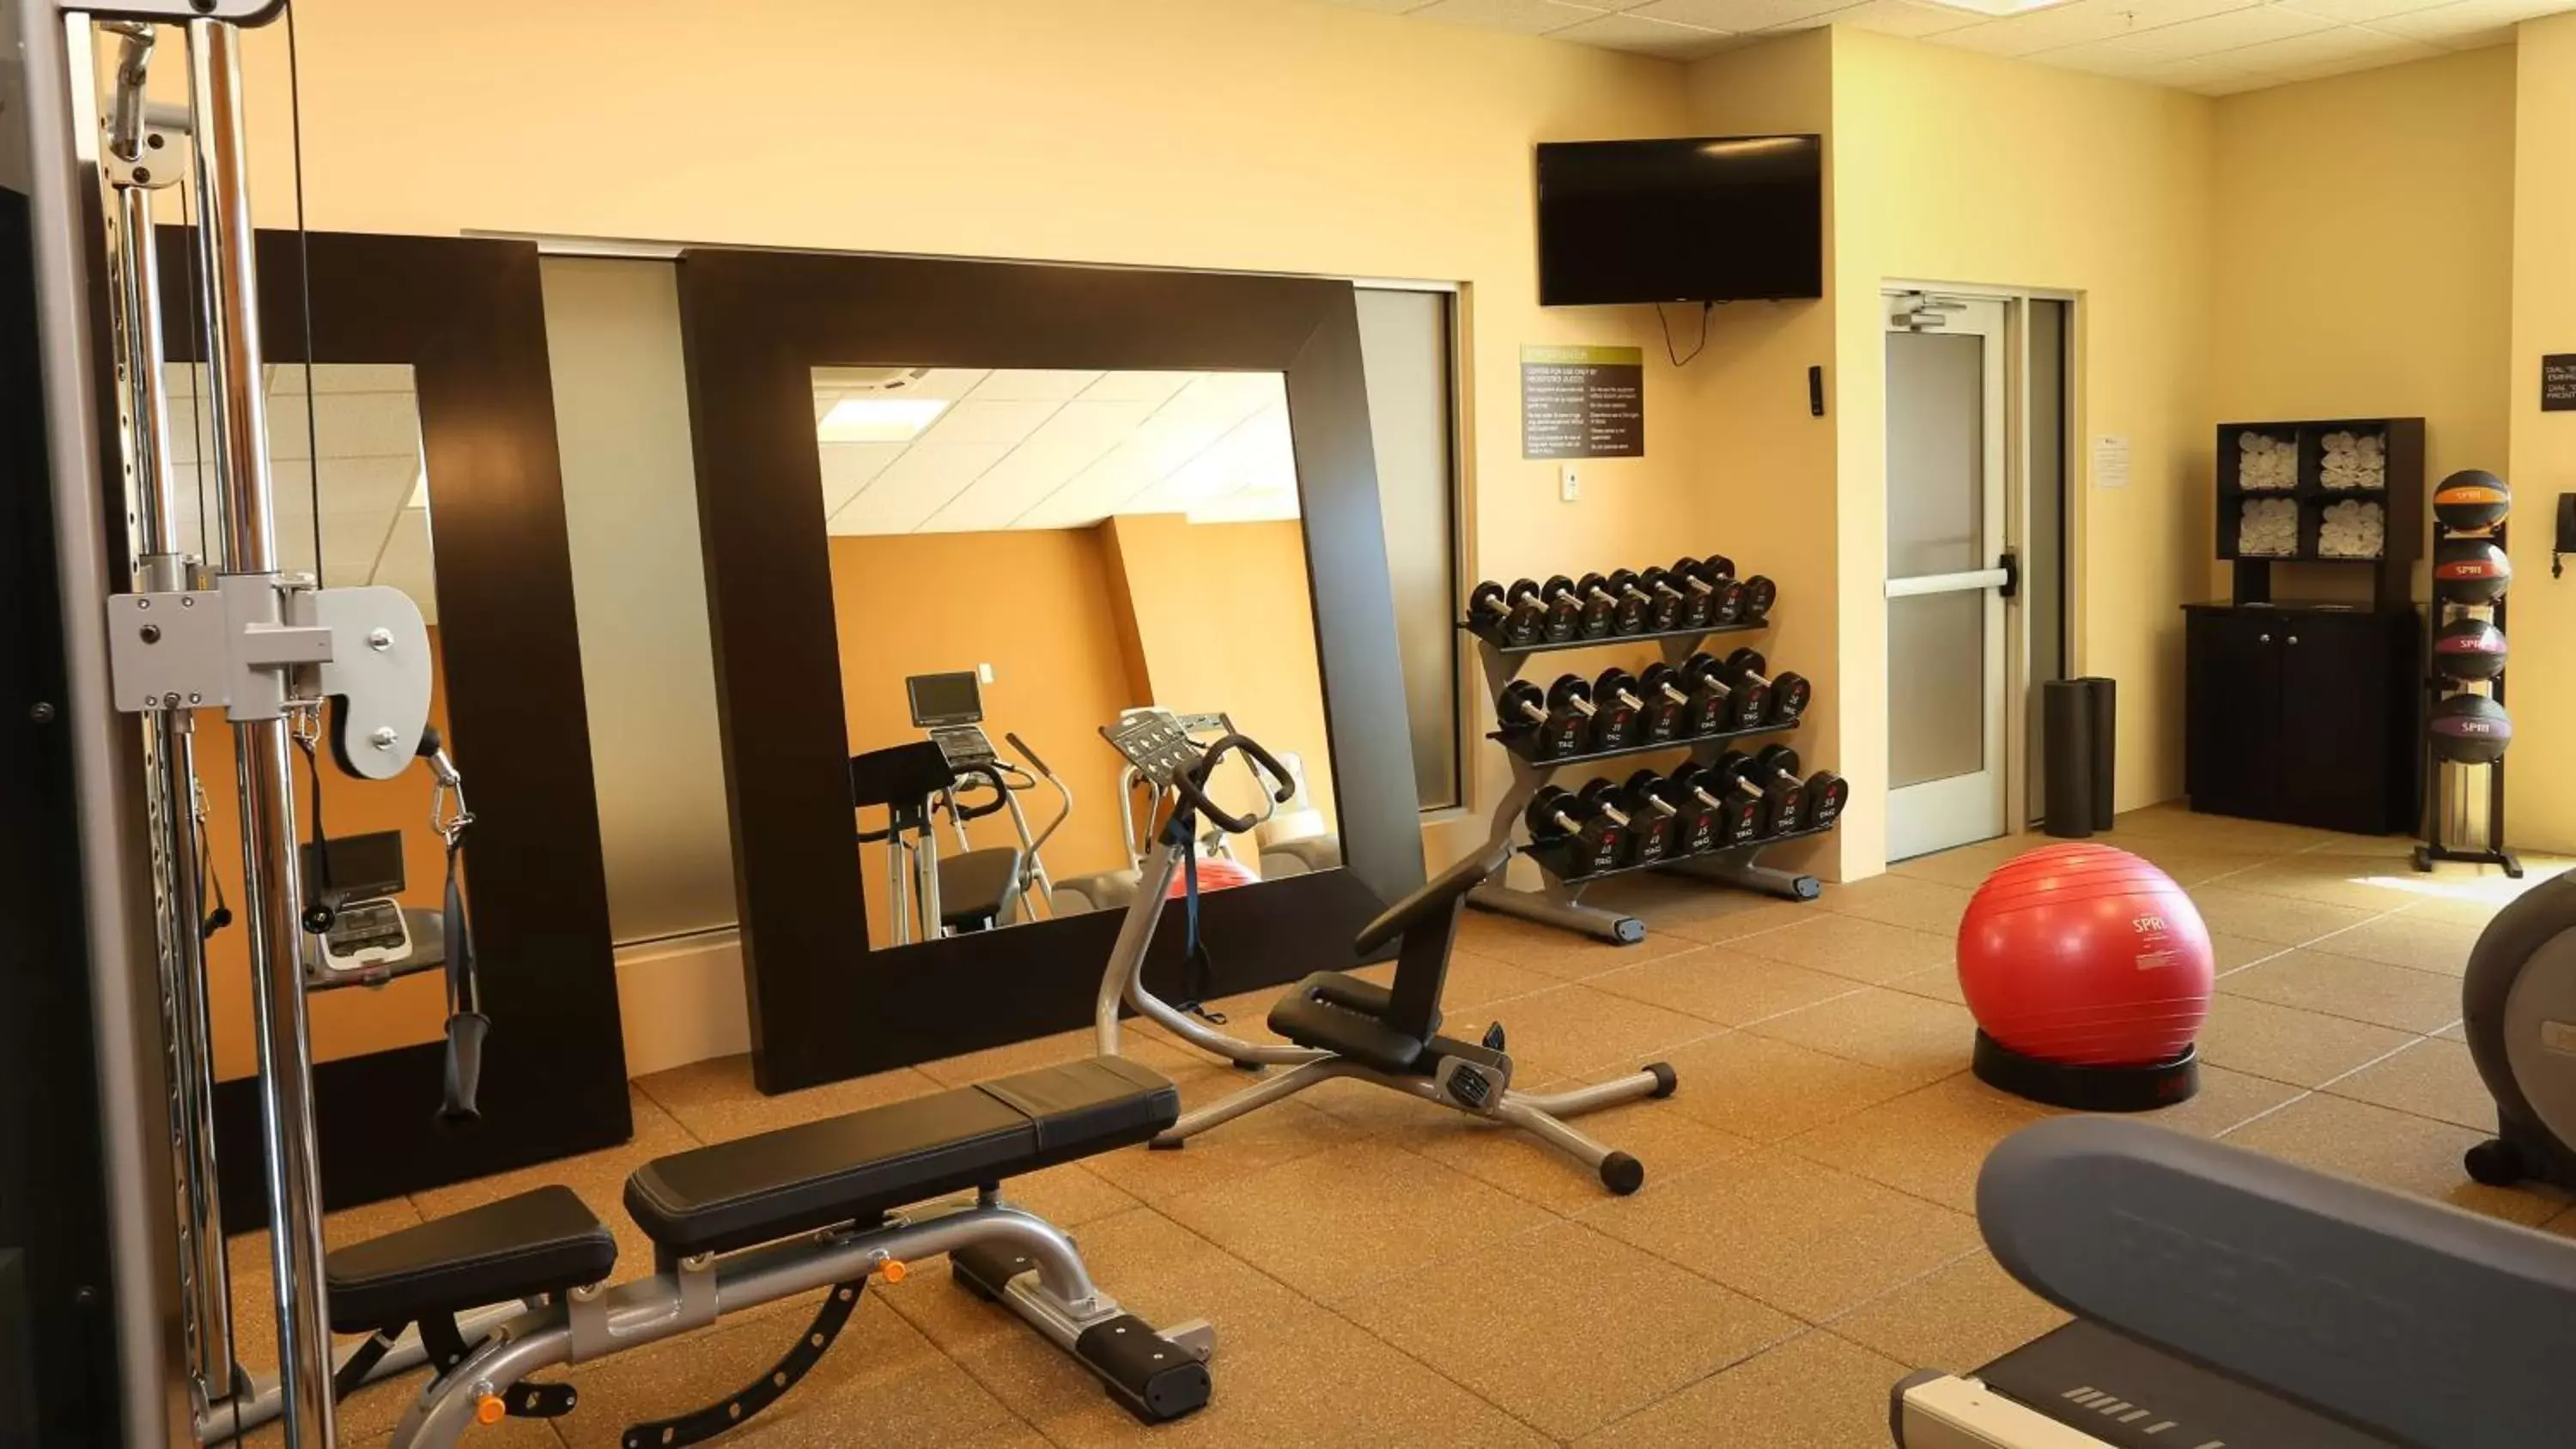 Fitness centre/facilities, Fitness Center/Facilities in Hilton Garden Inn Arvada/Denver, CO